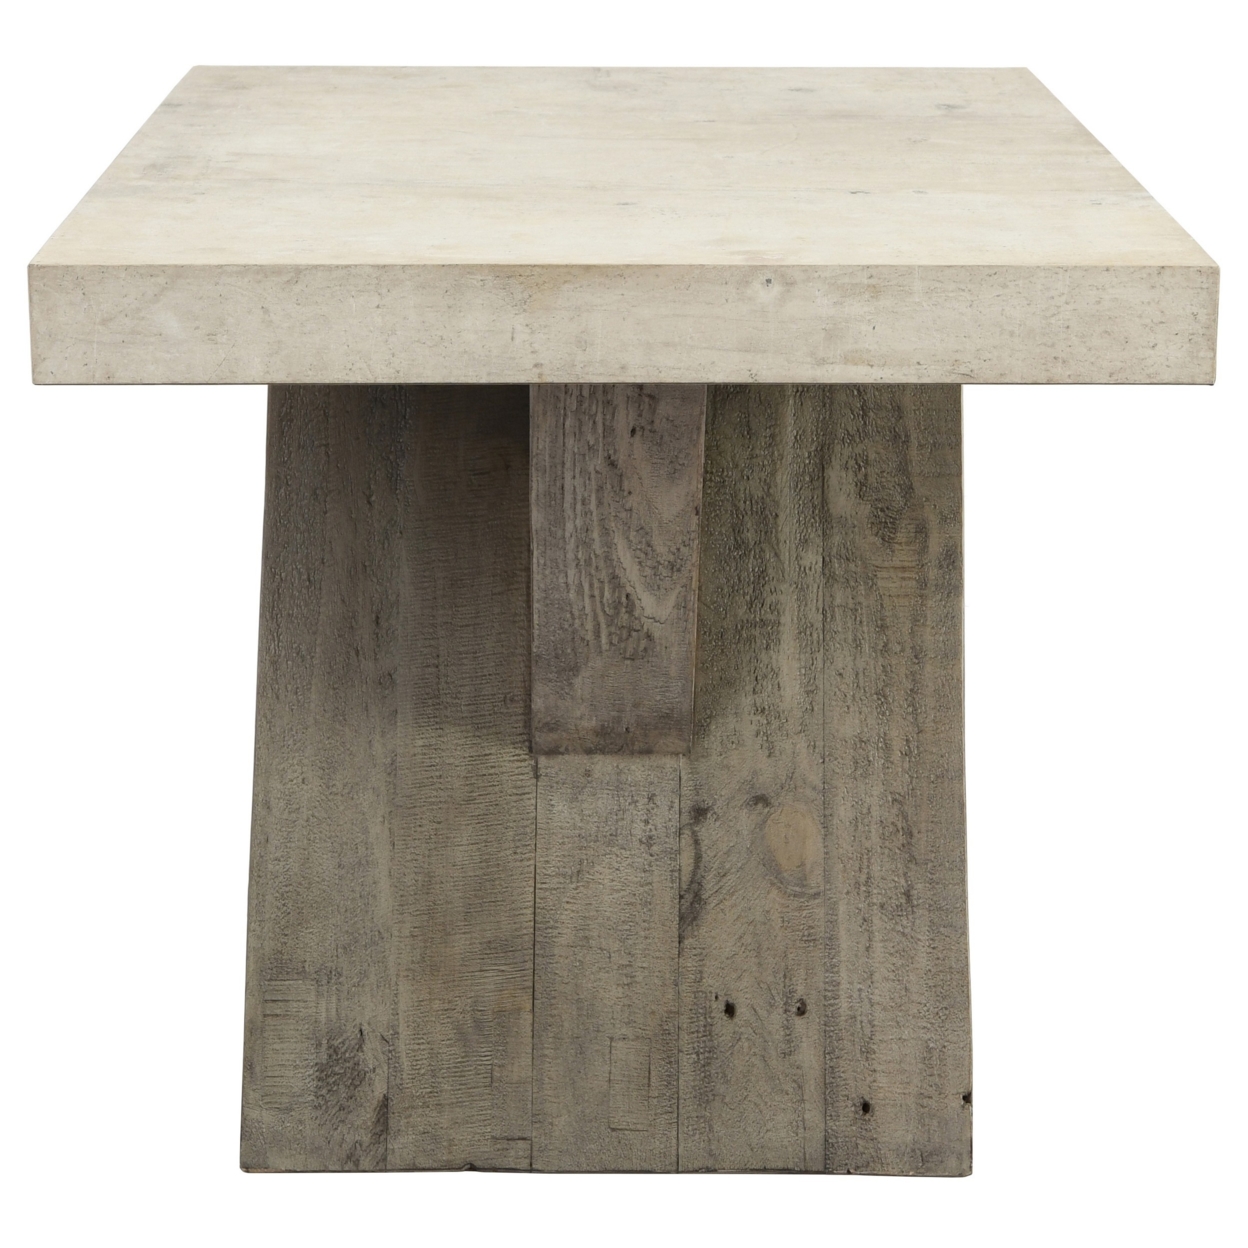 Inn 28 Inch Square End Table, Crossed Legs, Wood Grain Detail, Gray, Beige- Saltoro Sherpi